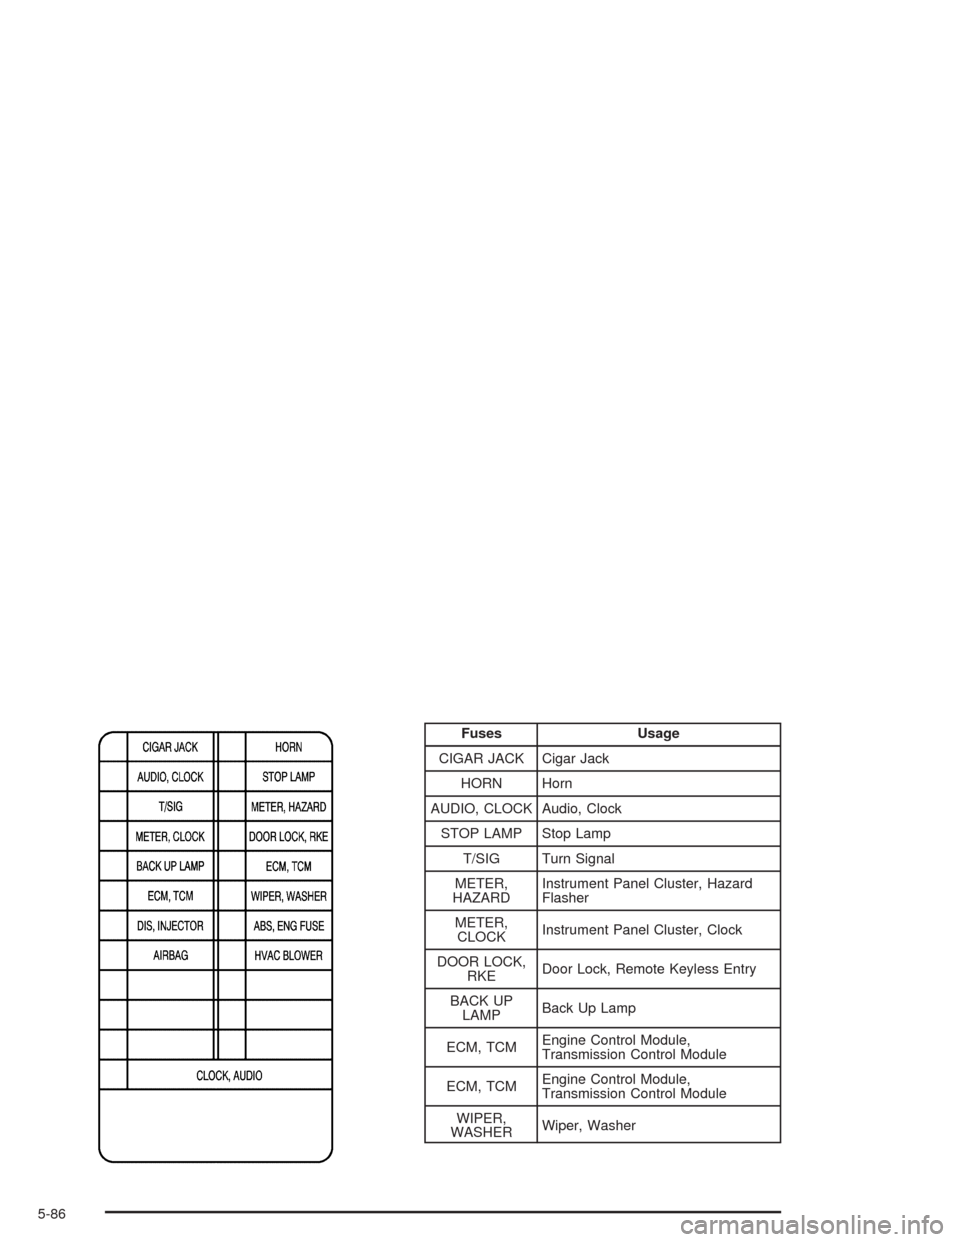 CHEVROLET AVEO 2004 1.G Owners Manual Fuses Usage
CIGAR JACK Cigar Jack
HORN Horn
AUDIO, CLOCK Audio, Clock
STOP LAMP Stop Lamp
T/SIG Turn Signal
METER,
HAZARDInstrument Panel Cluster, Hazard
Flasher
METER,
CLOCKInstrument Panel Cluster, 